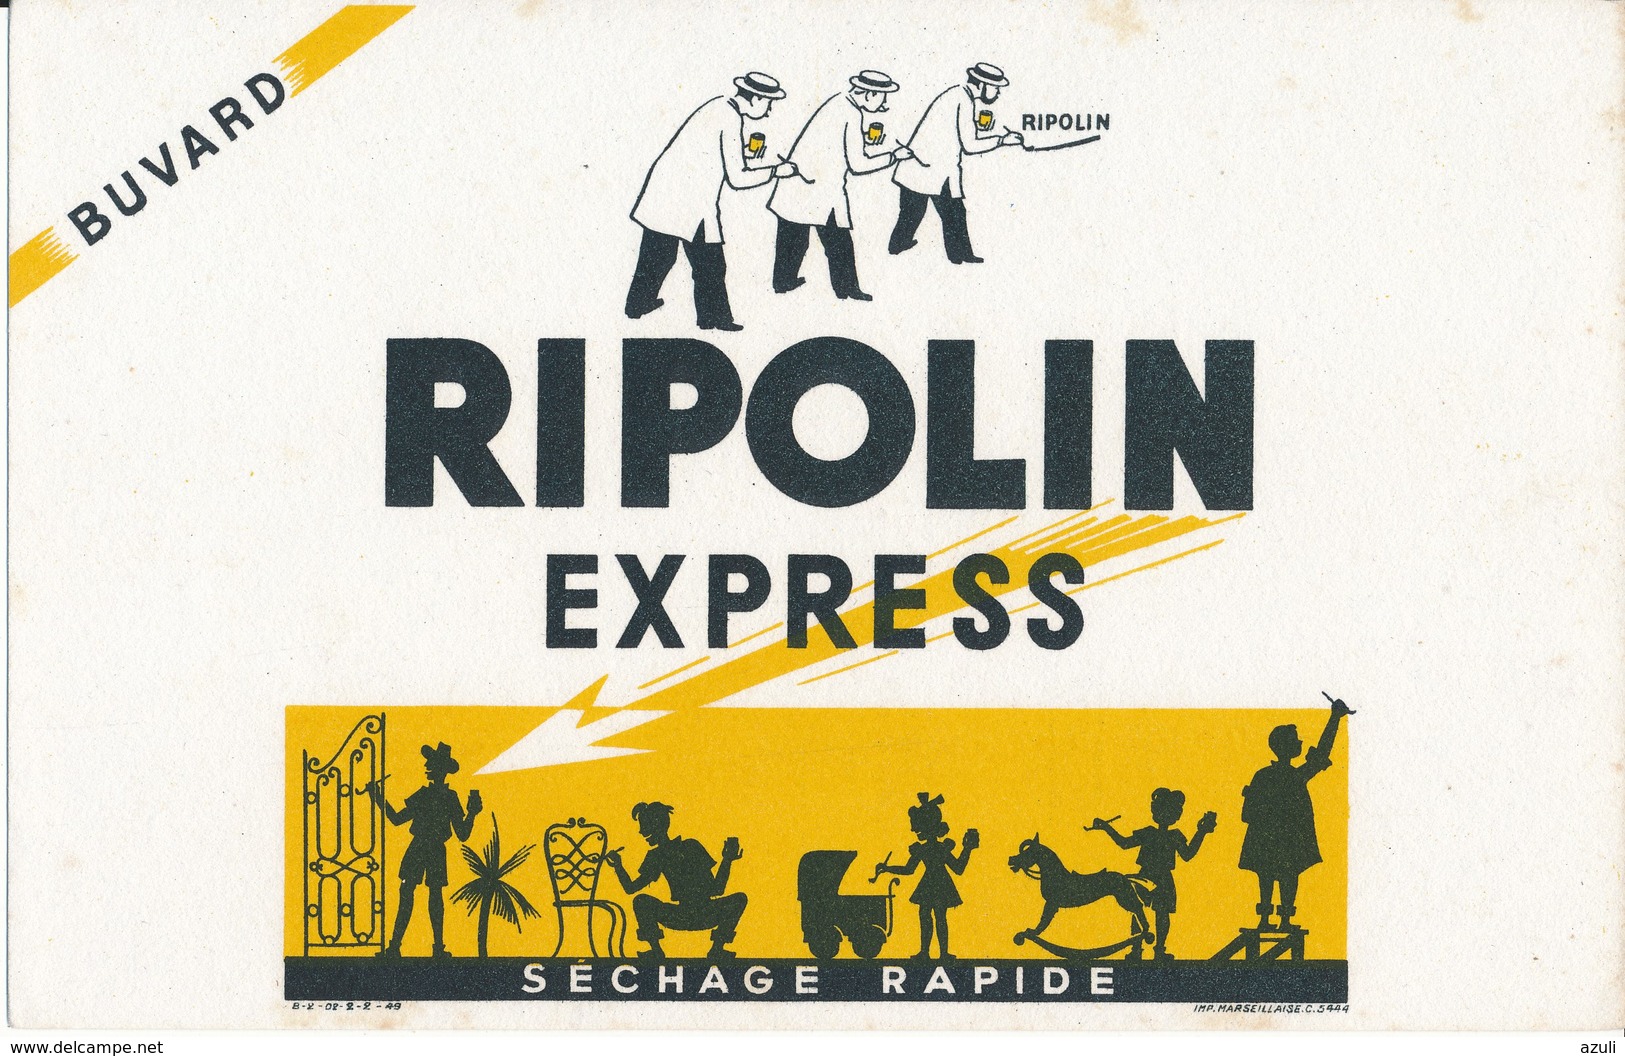 BUVARD - Peinture RIPOLIN Express - Farben & Lacke